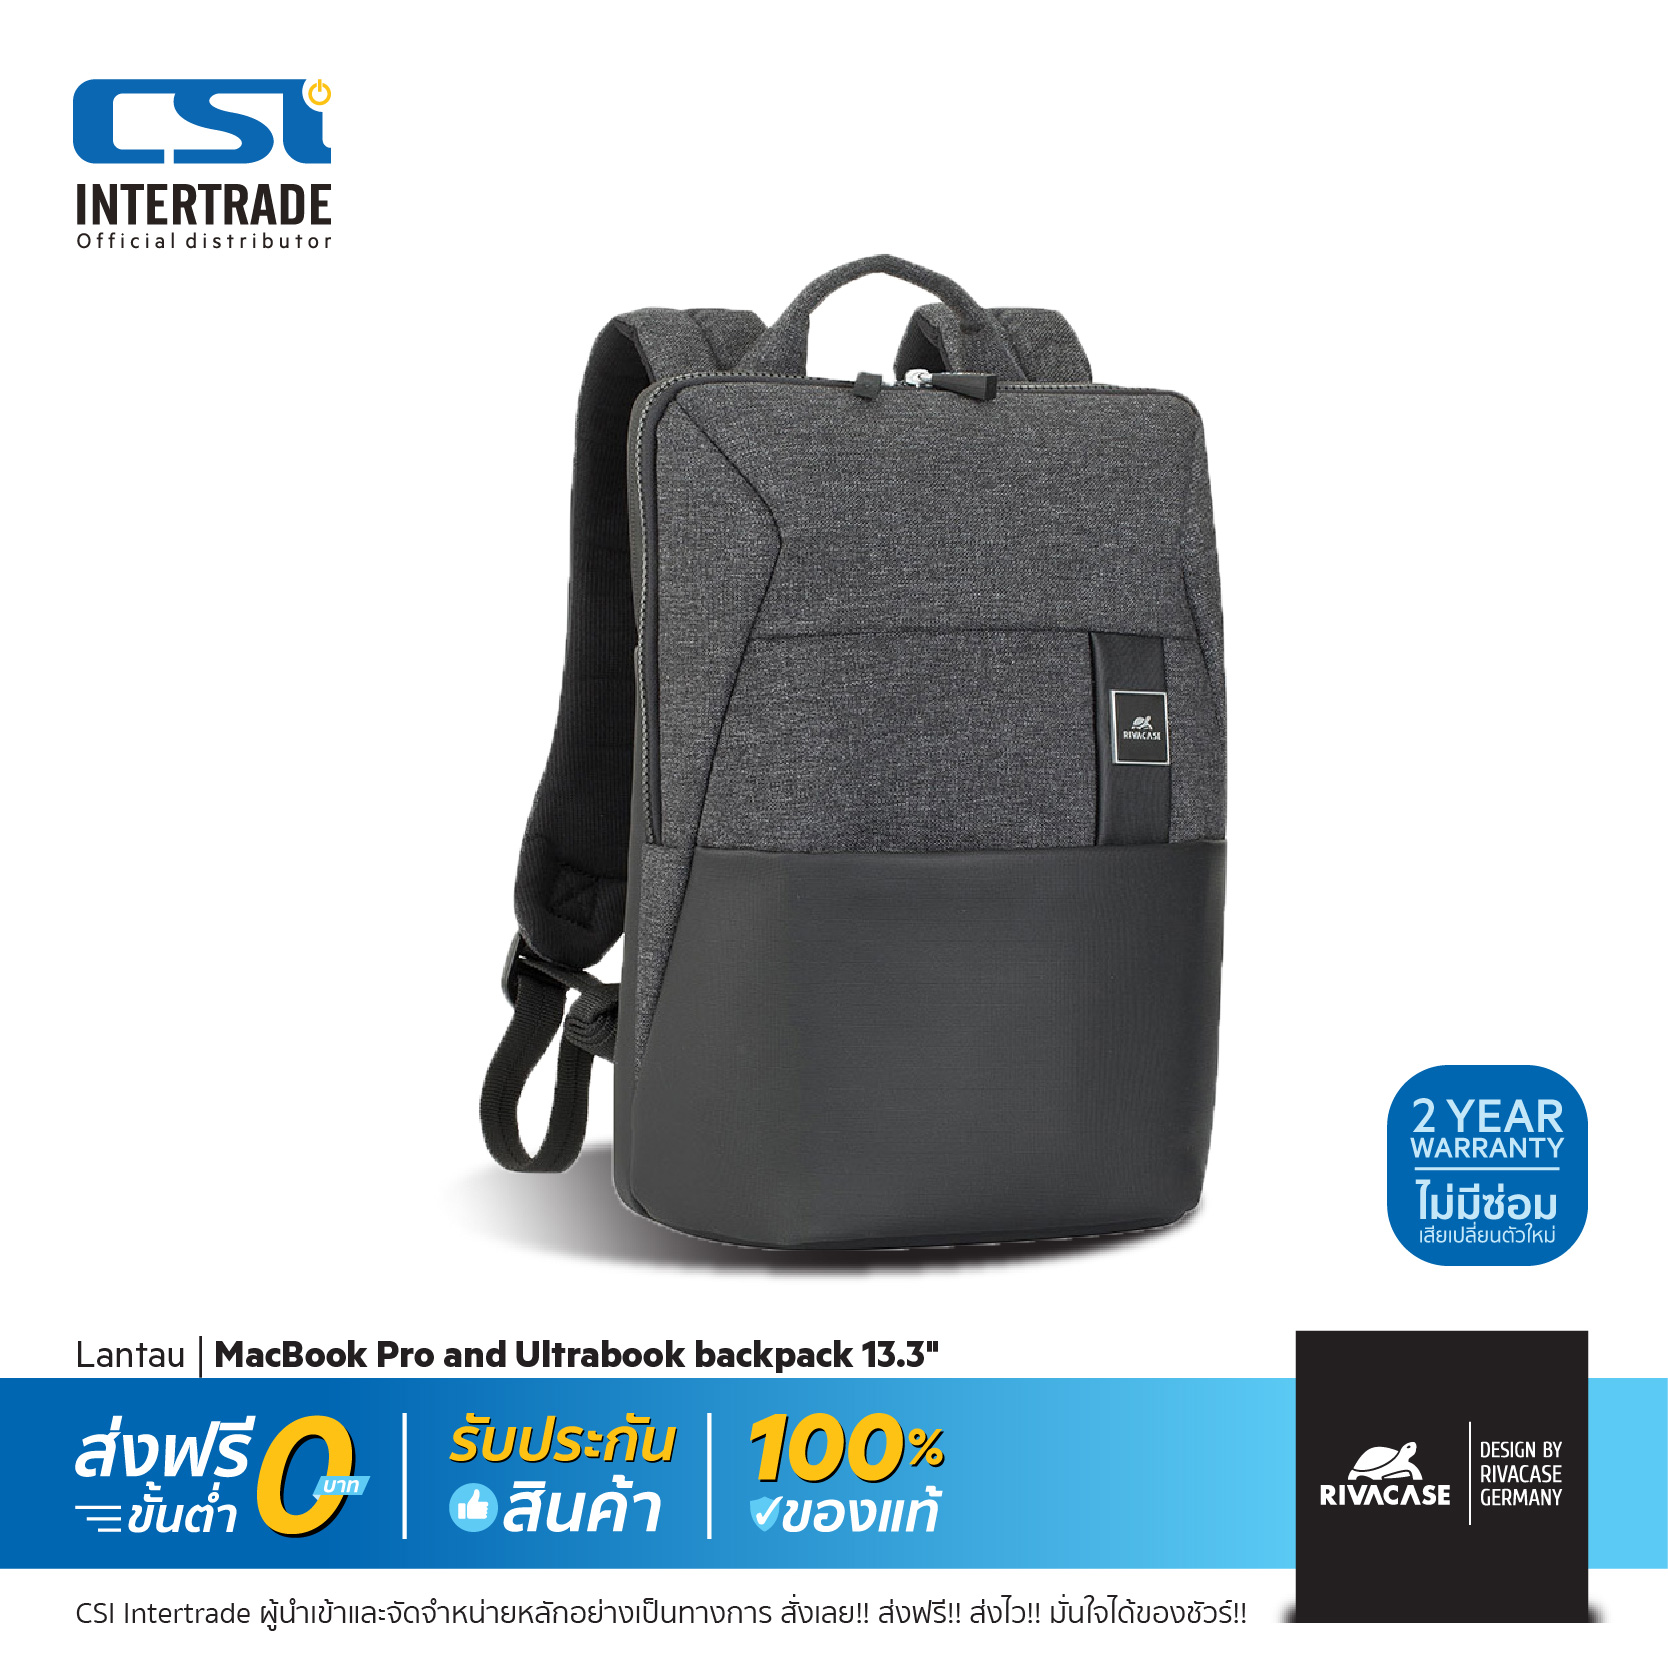 Rivacase กระเป๋าโน๊ตบุ๊ค แบบสะพายหลัง 8825 black mélange backpack 13.3 นิ้ว สำหรับ Macbook Ultrabook Notebook